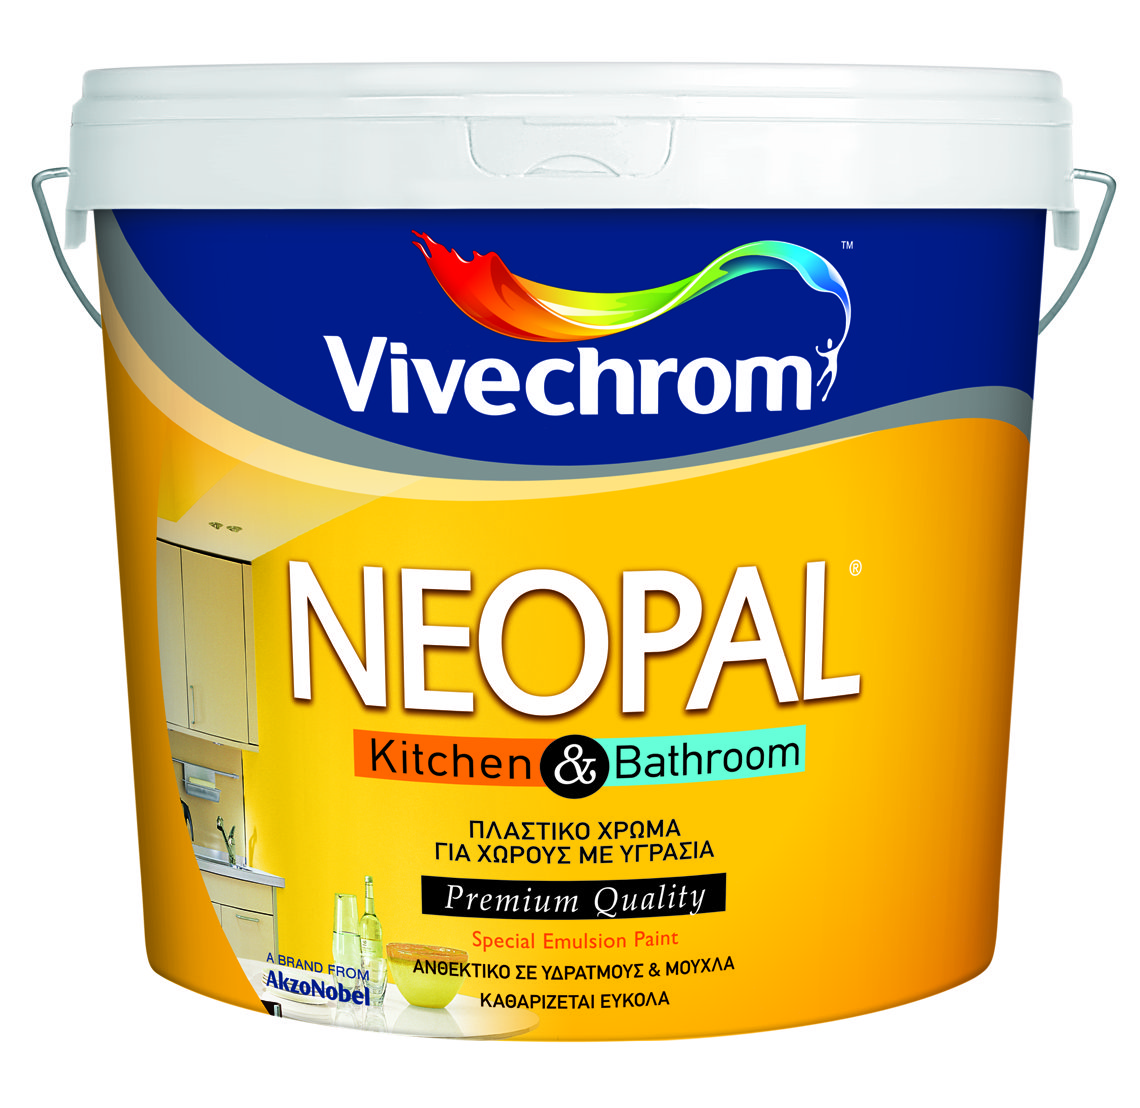 Vivechrom Neopal Kitchen & Bathroom Αντιμικροβιακό Χρώμα για Χώρους με Υγρασία Βάση D 3L